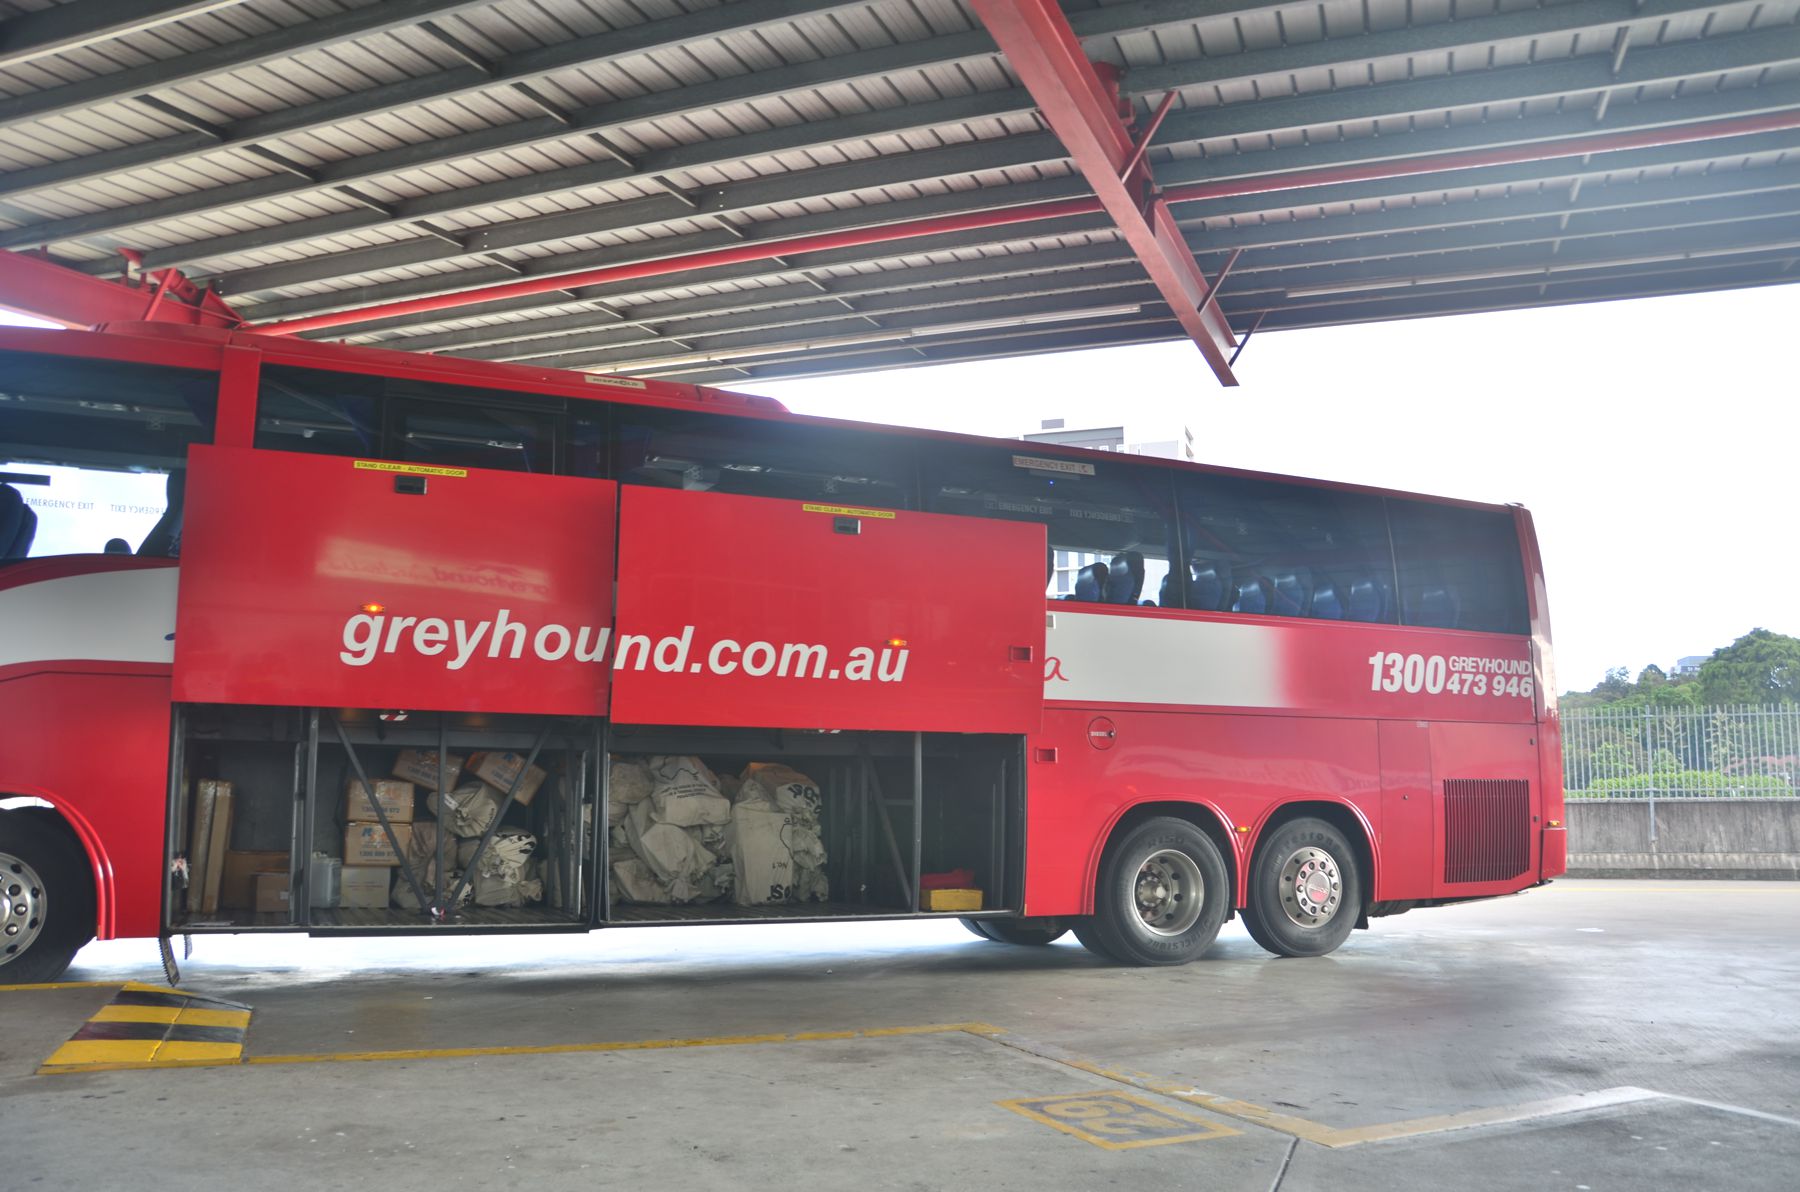 DSC 1326 Travel Australia Cheaply Via Greyhound Bus